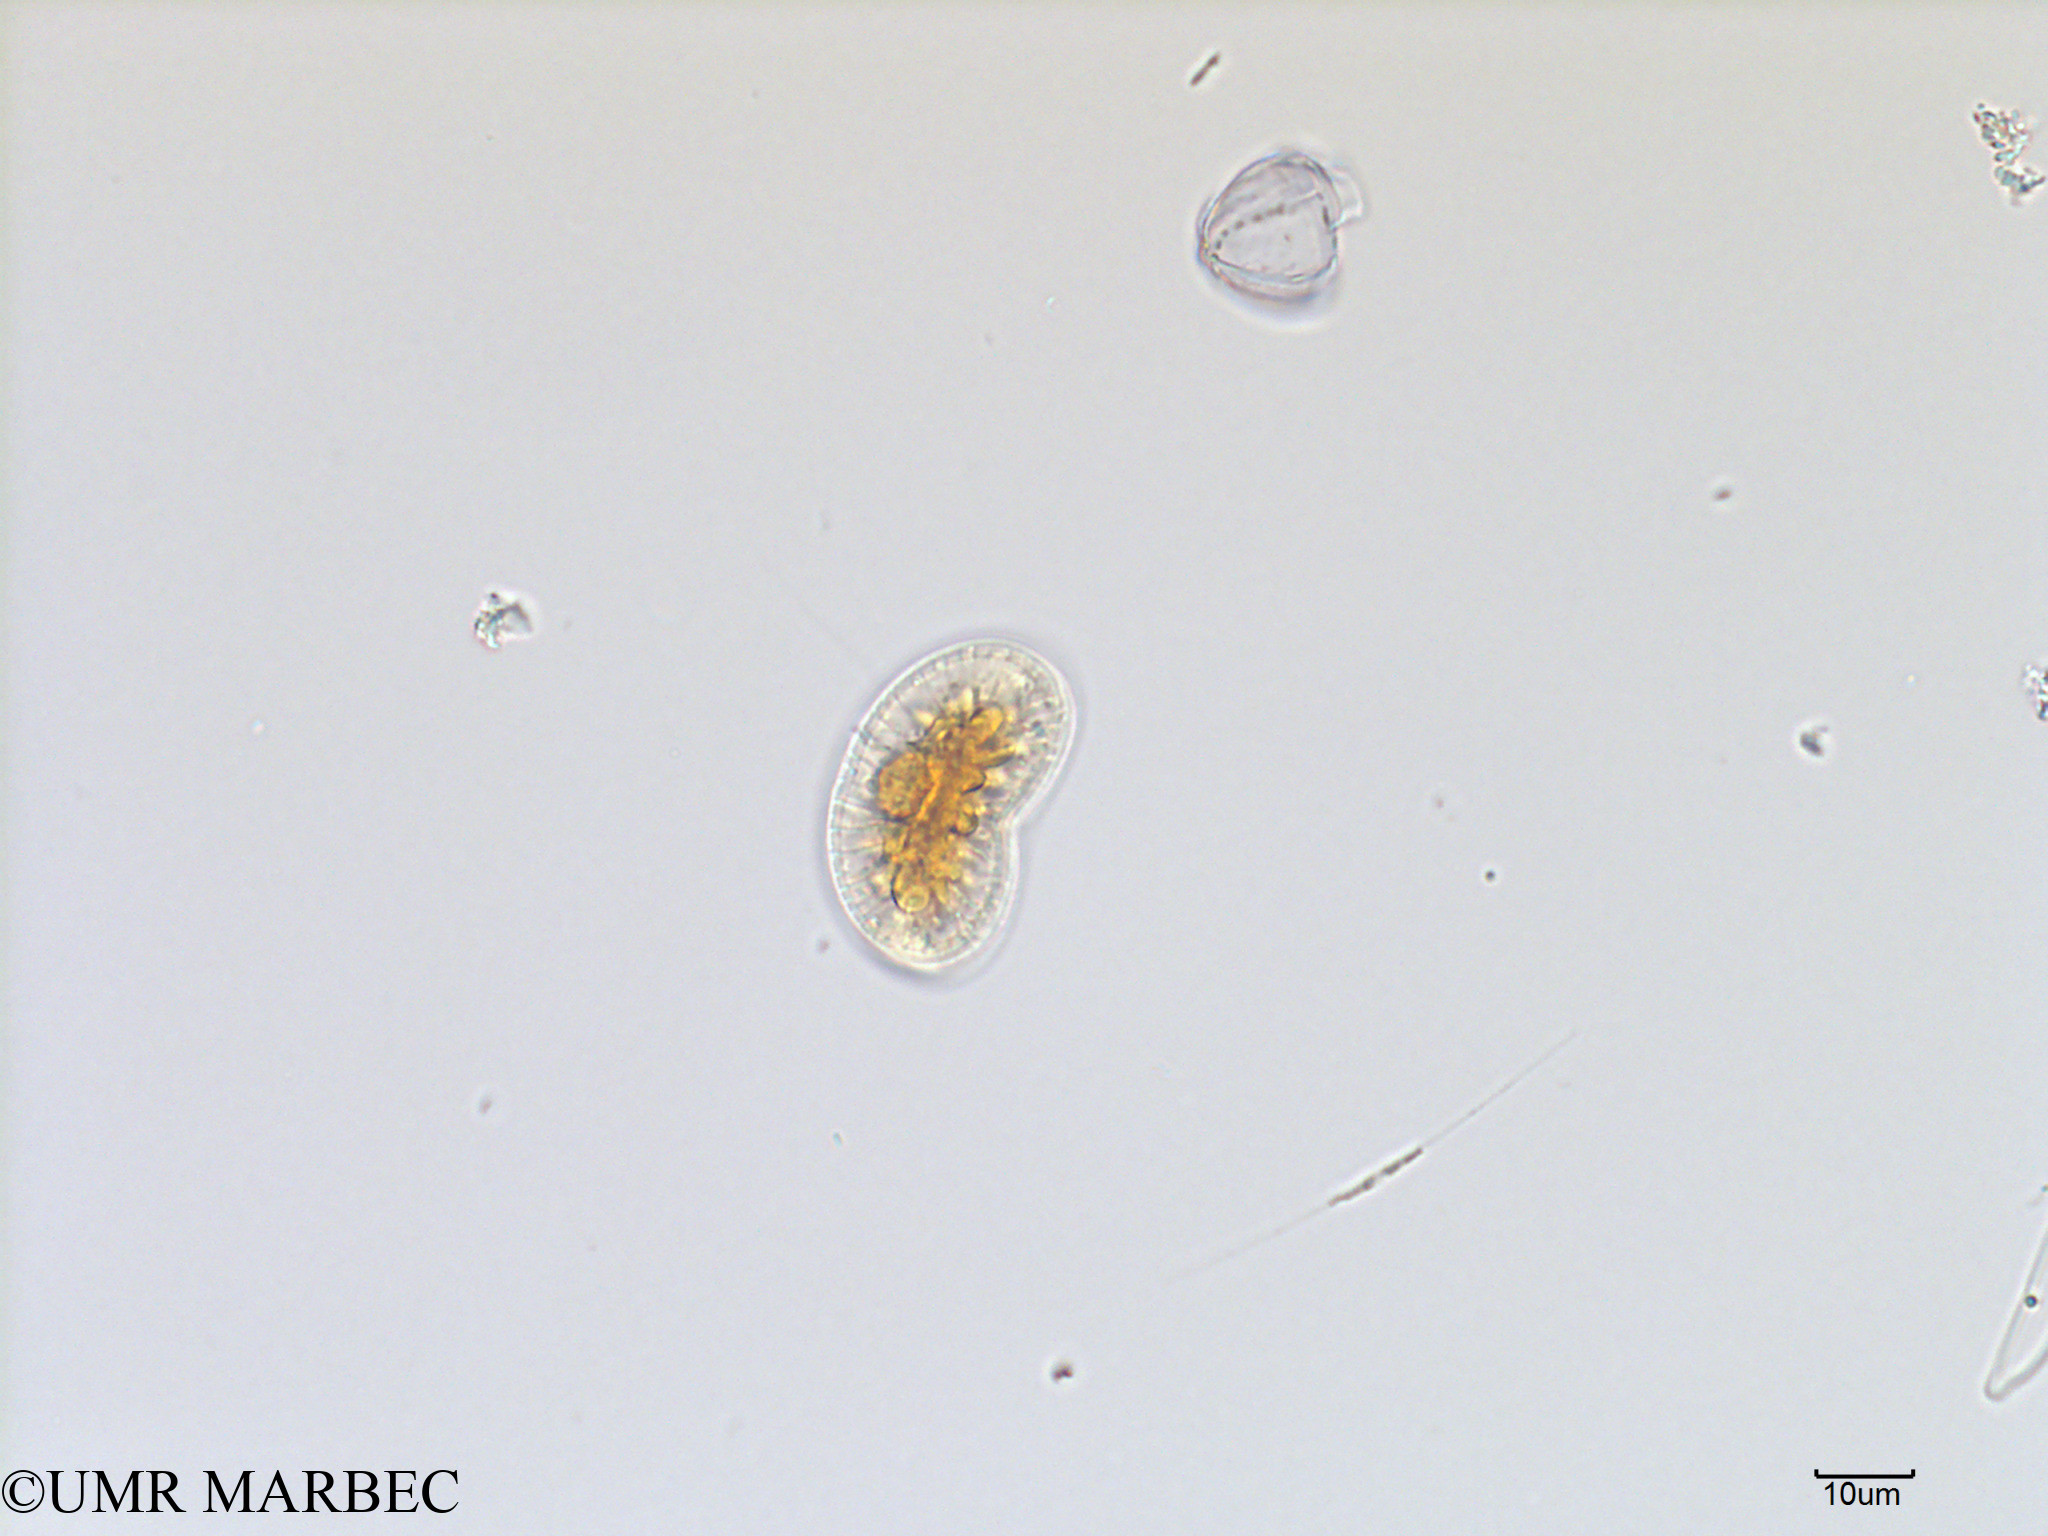 phyto/Scattered_Islands/iles_glorieuses/SIREME November 2015/Plagiodiscus nervatus (SIREME-Glorieuses2015-ech2-221116-photo26-2)(copy).jpg